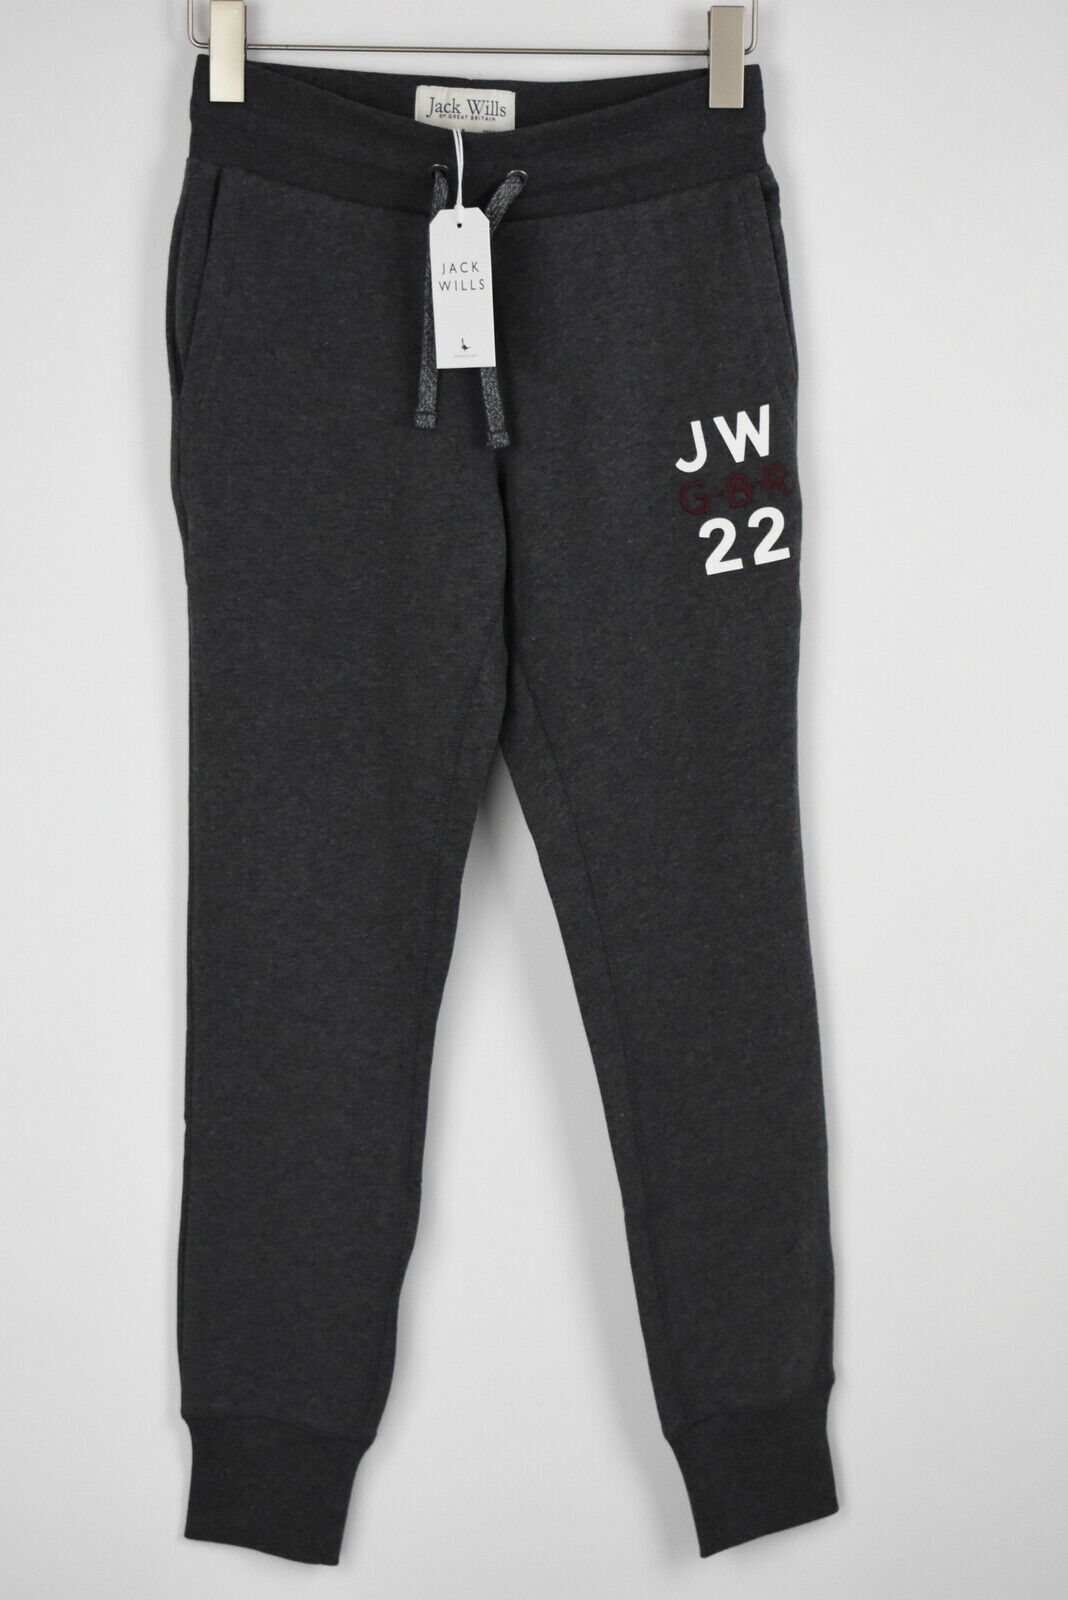 JACK WILLS COLINDALE WMN UK 6 US 2 ~XS Skinny Fleece Sweatpants Trousers 7868*mm